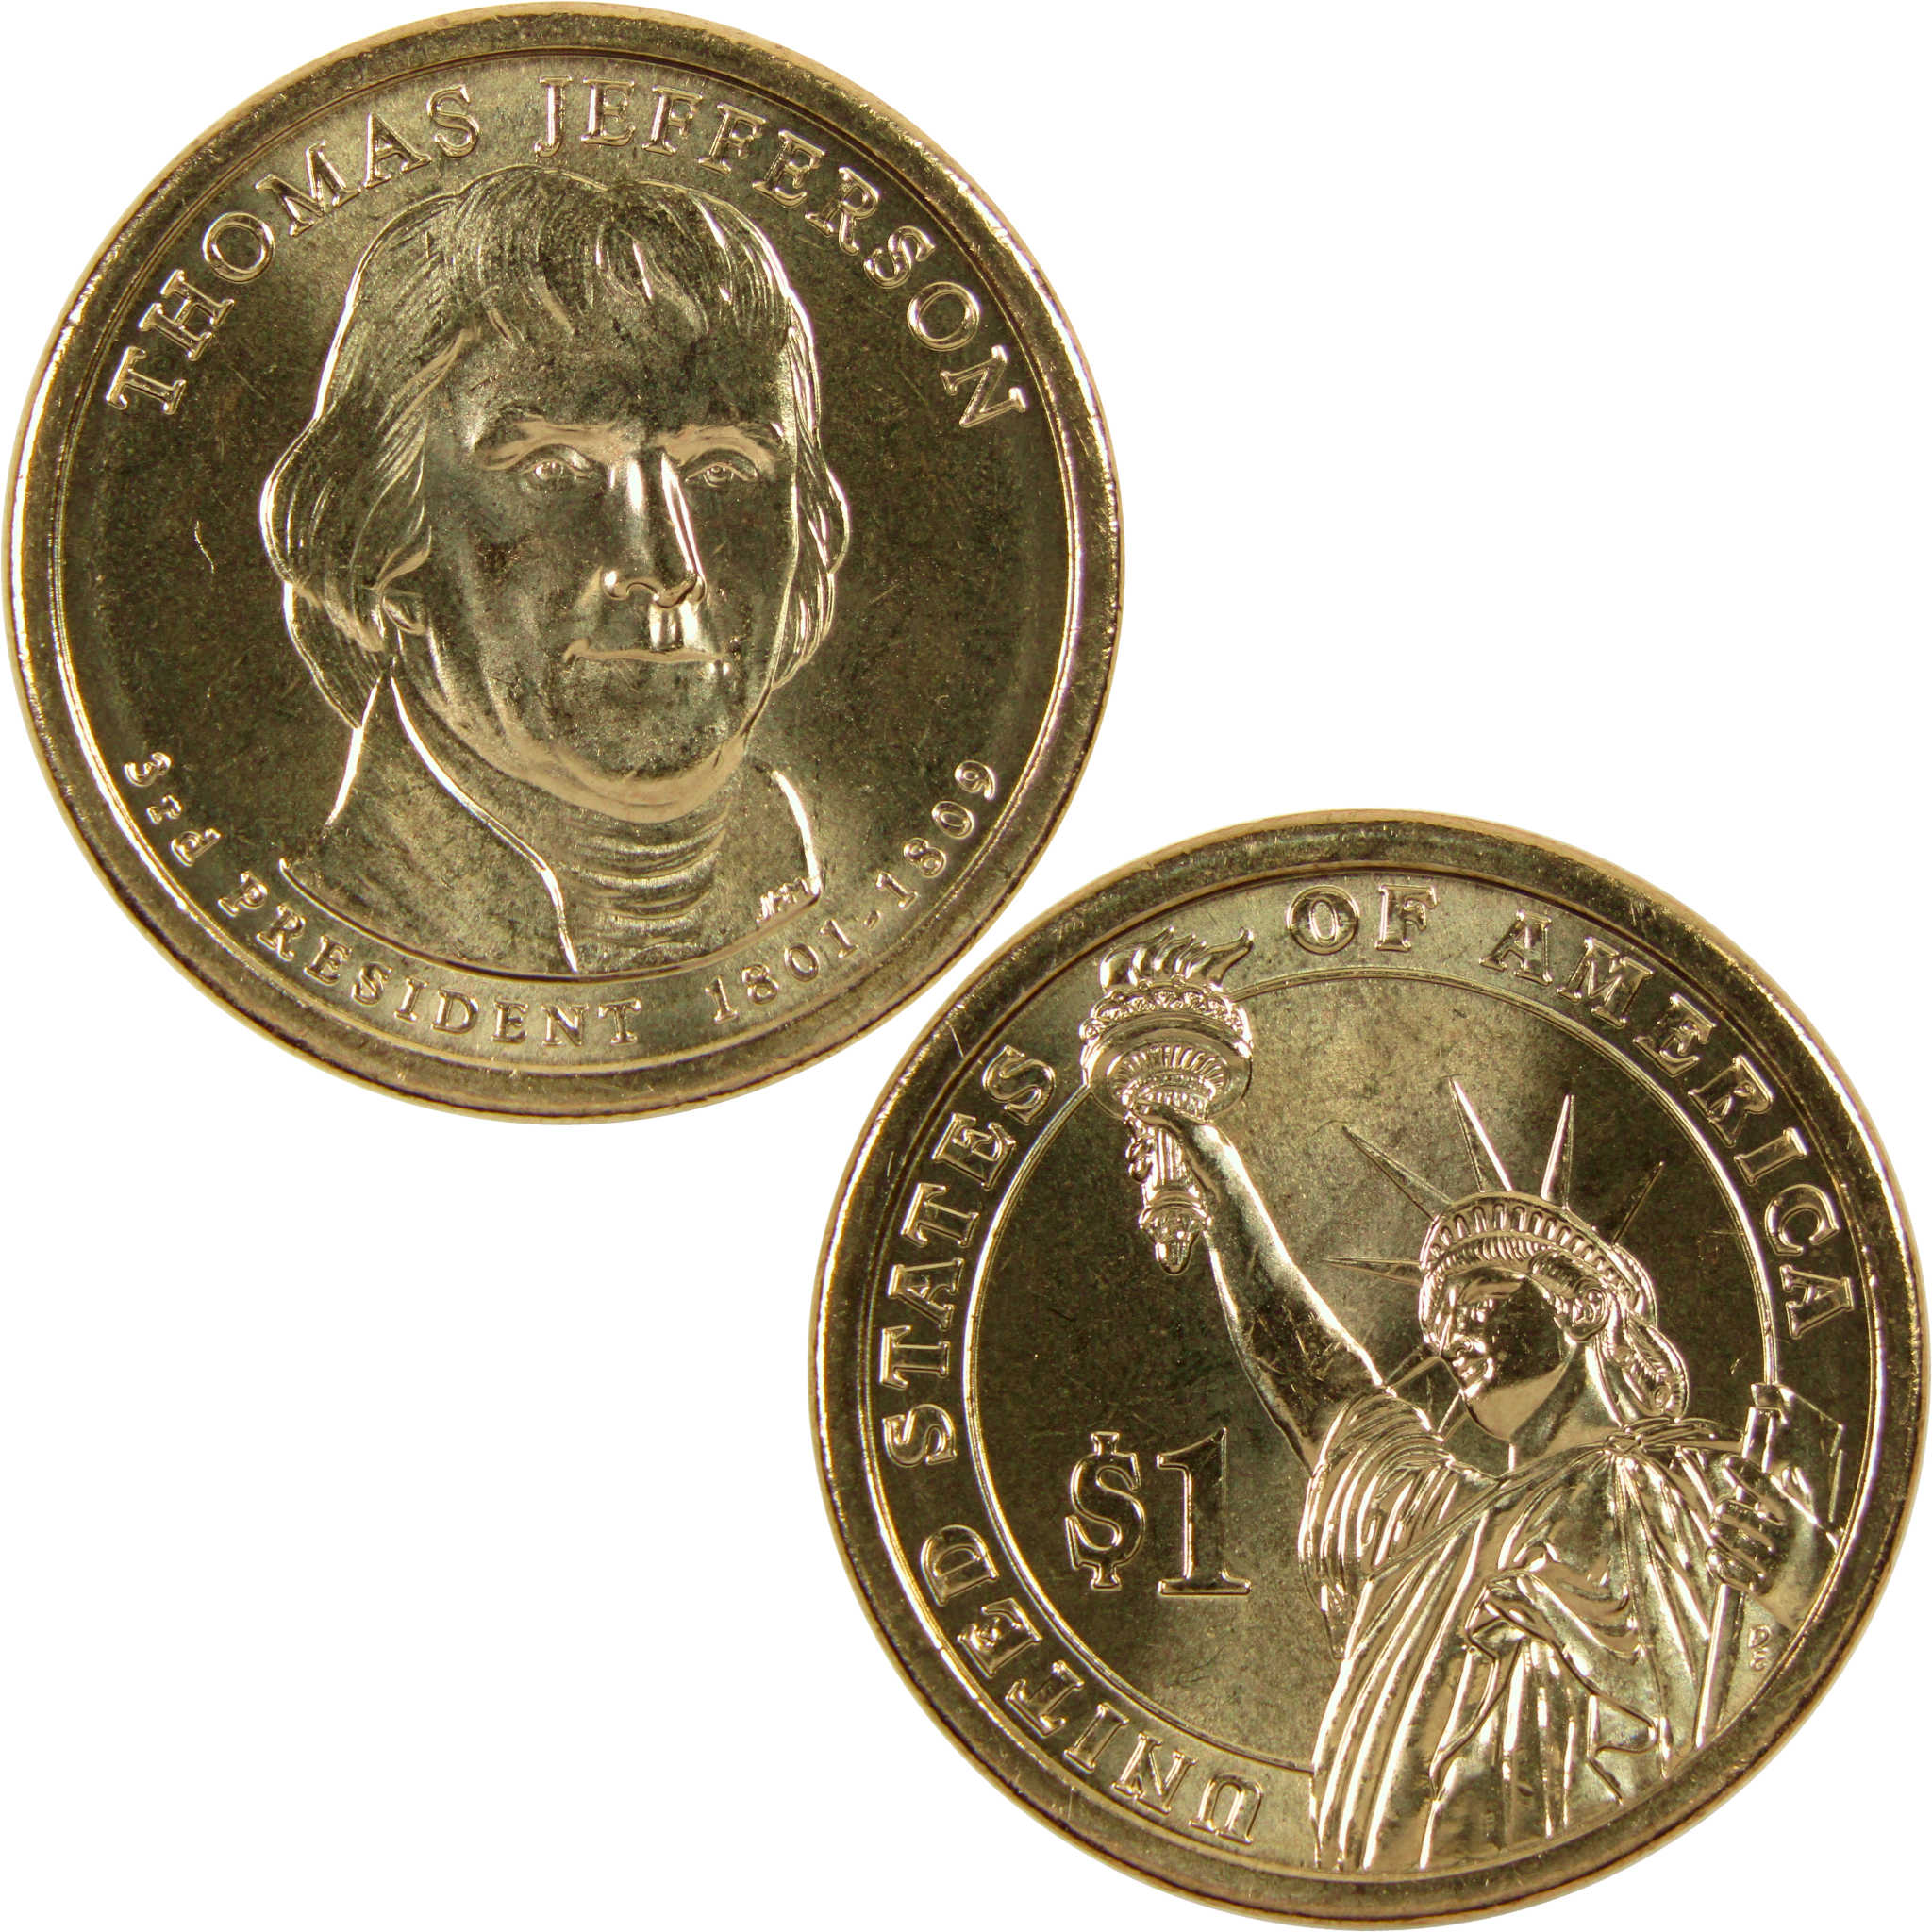 2007 D Thomas Jefferson Presidential Dollar BU Uncirculated $1 Coin